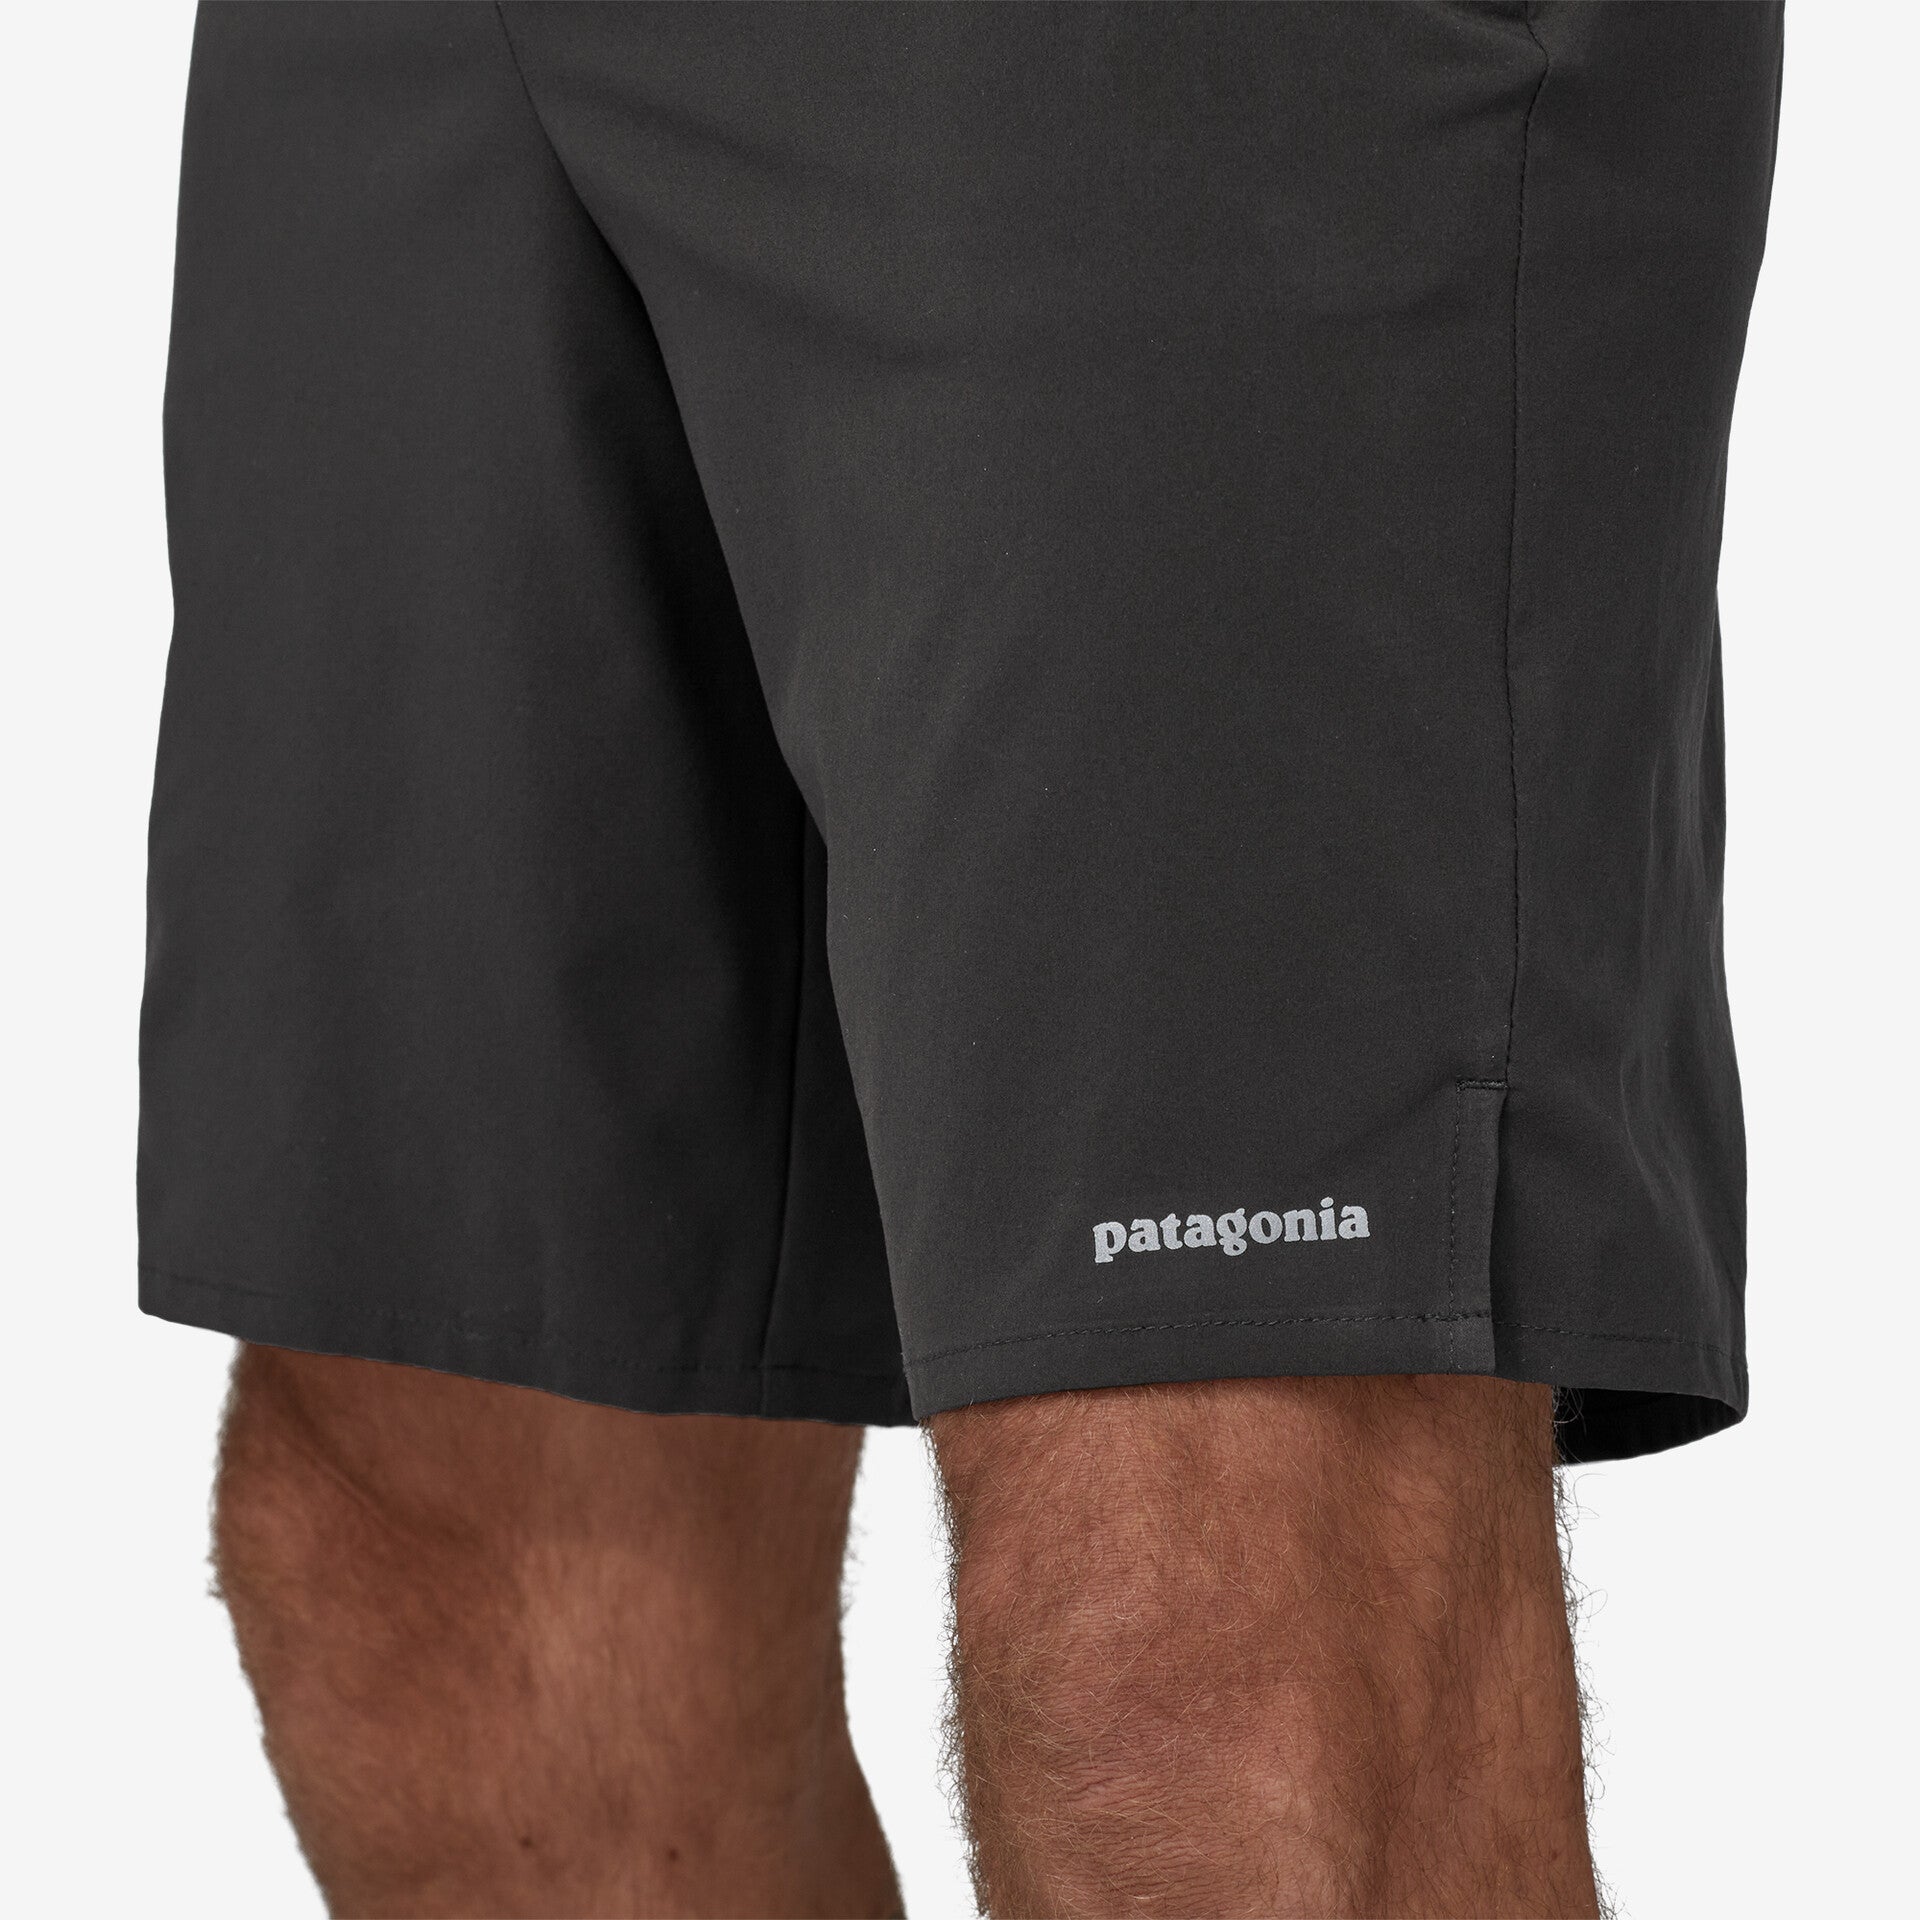 PATAGONIA Multi Trails Shorts 8" - Men's